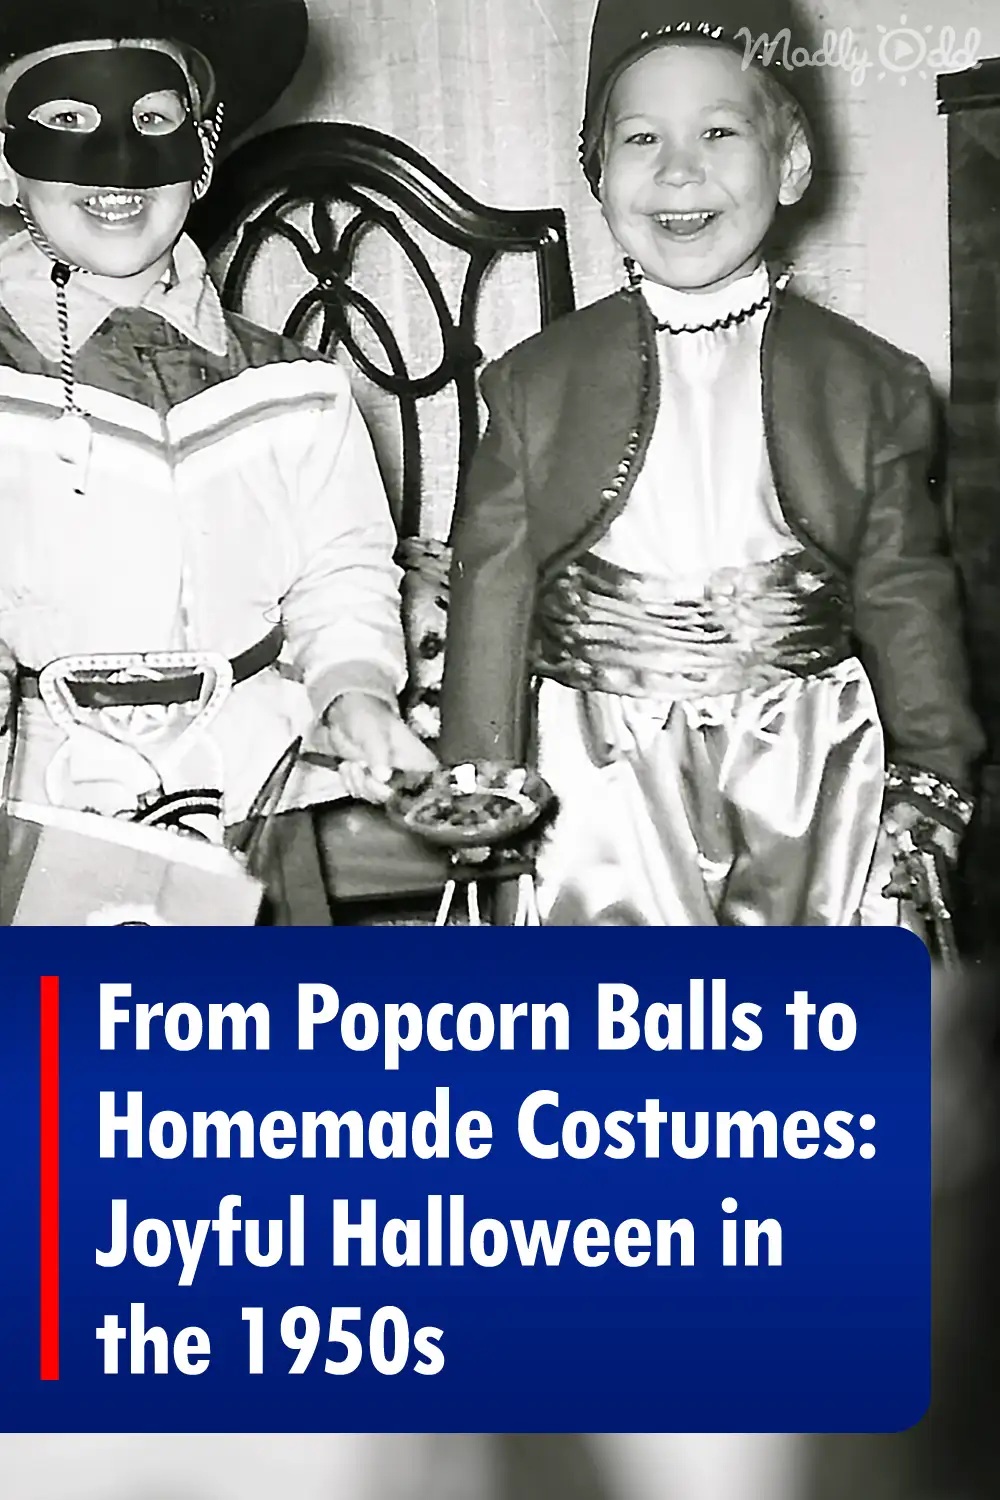 From Popcorn Balls to Homemade Costumes: Joyful Halloween in the 1950s